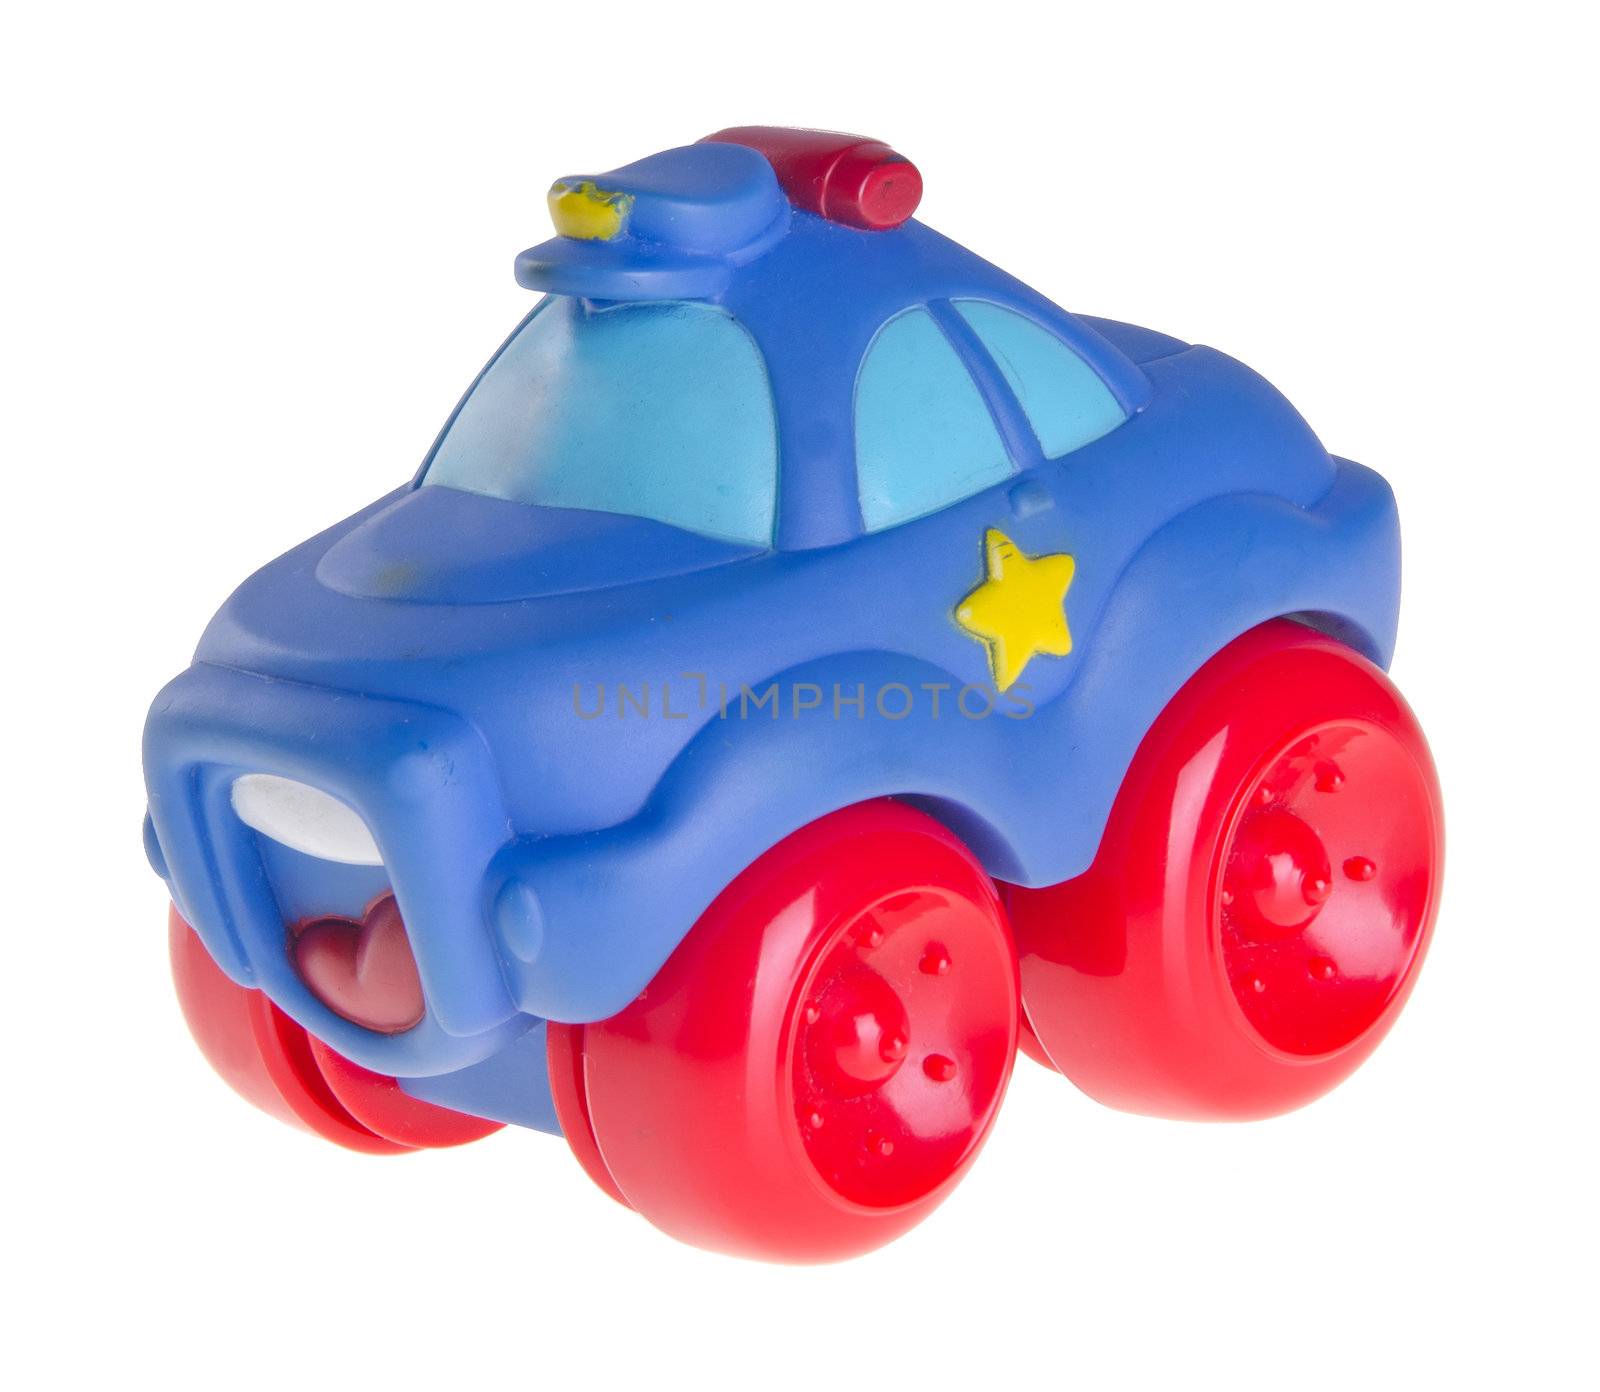 Baby car, Baby toy car on background by heinteh